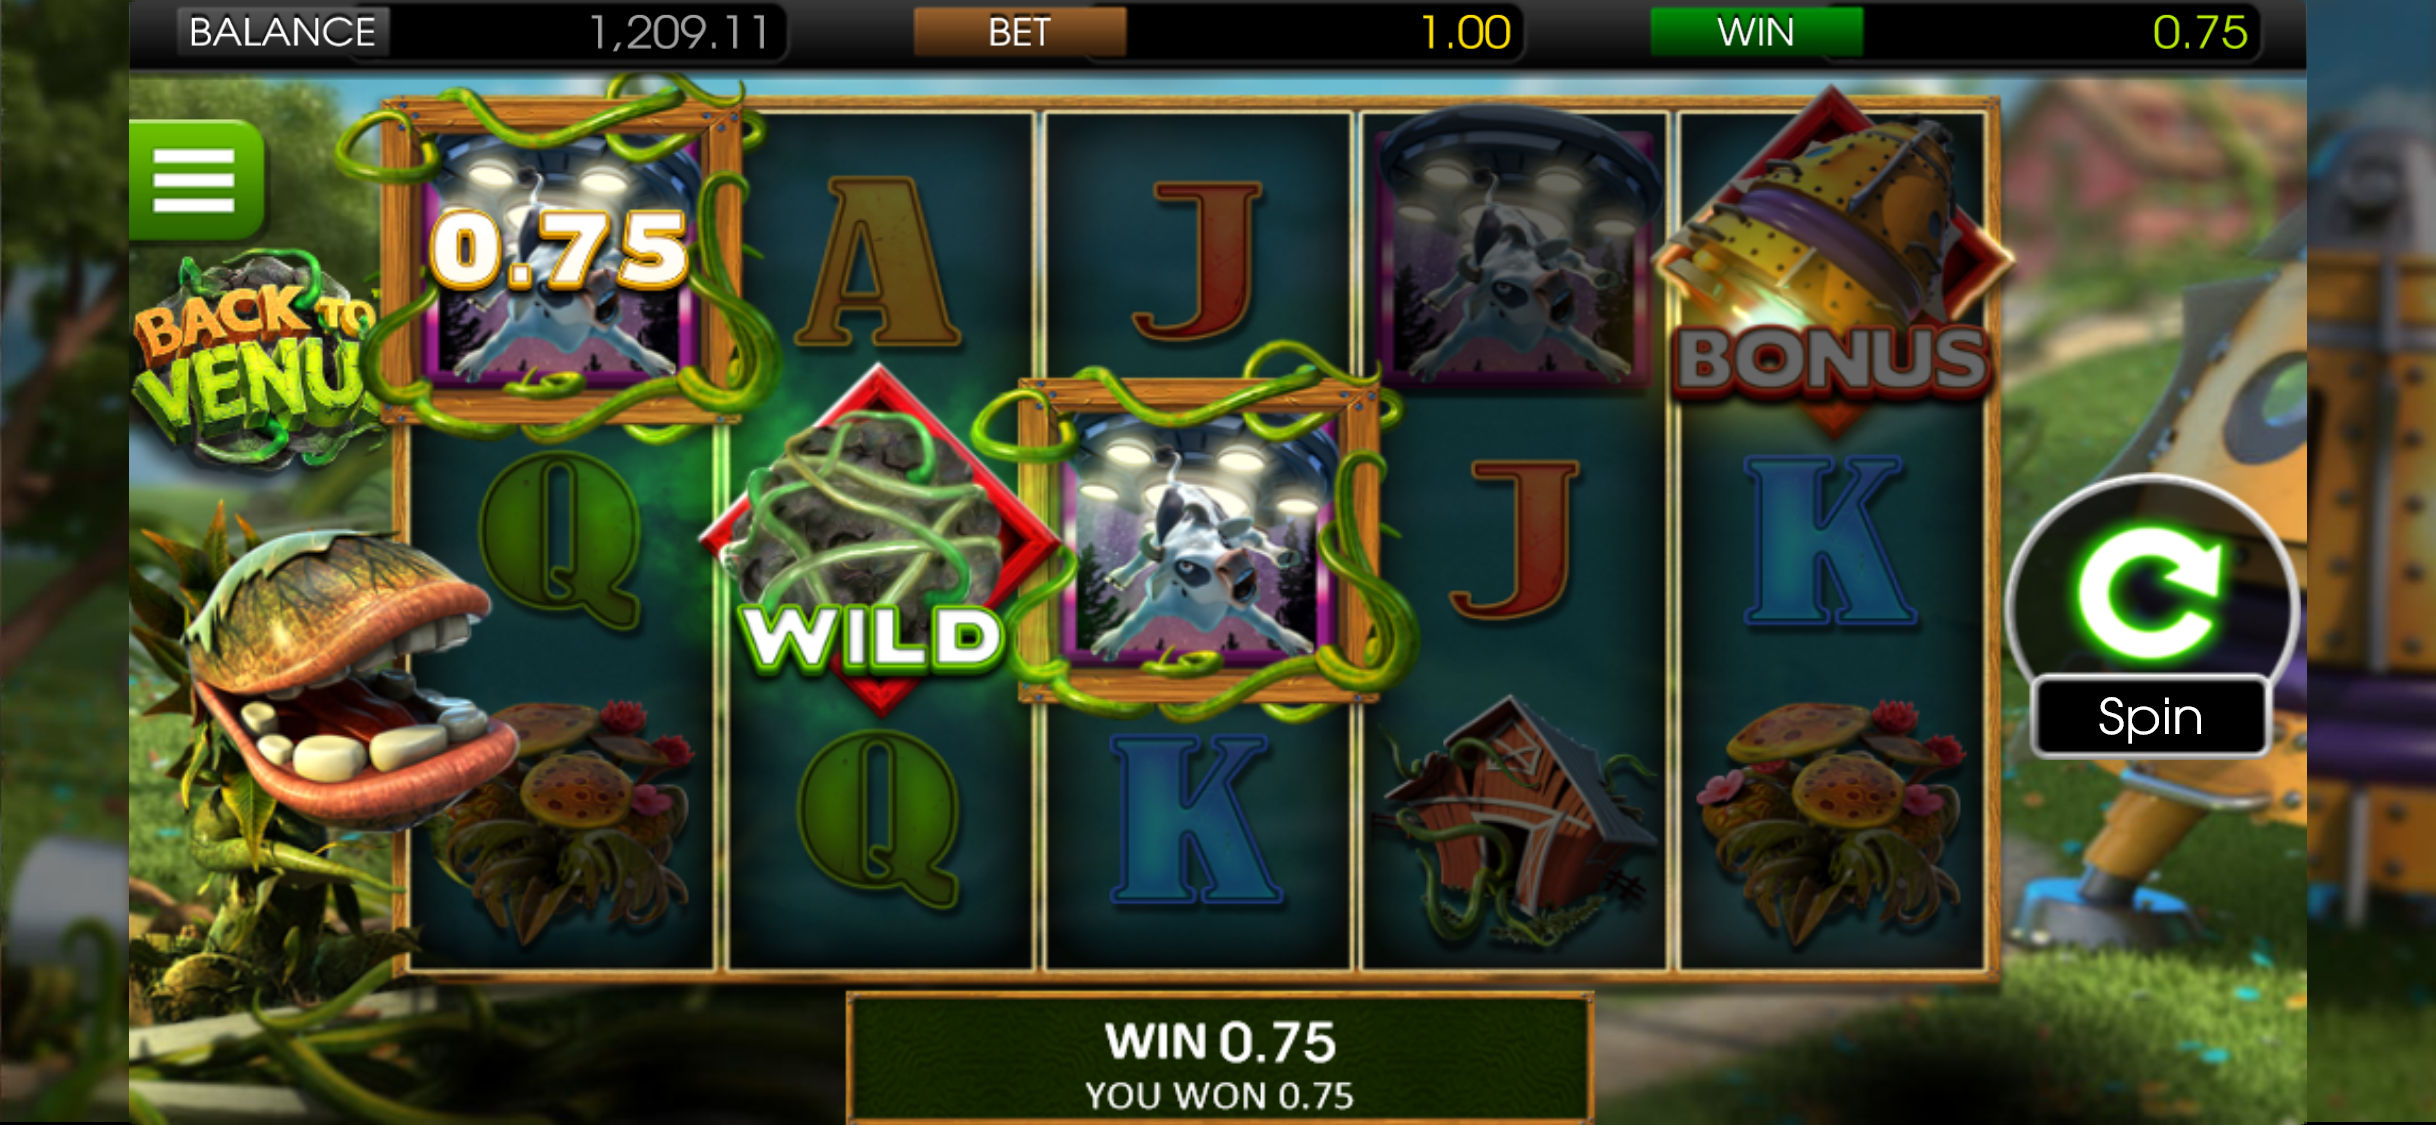 Casino Intense Mobile Slot Games Review